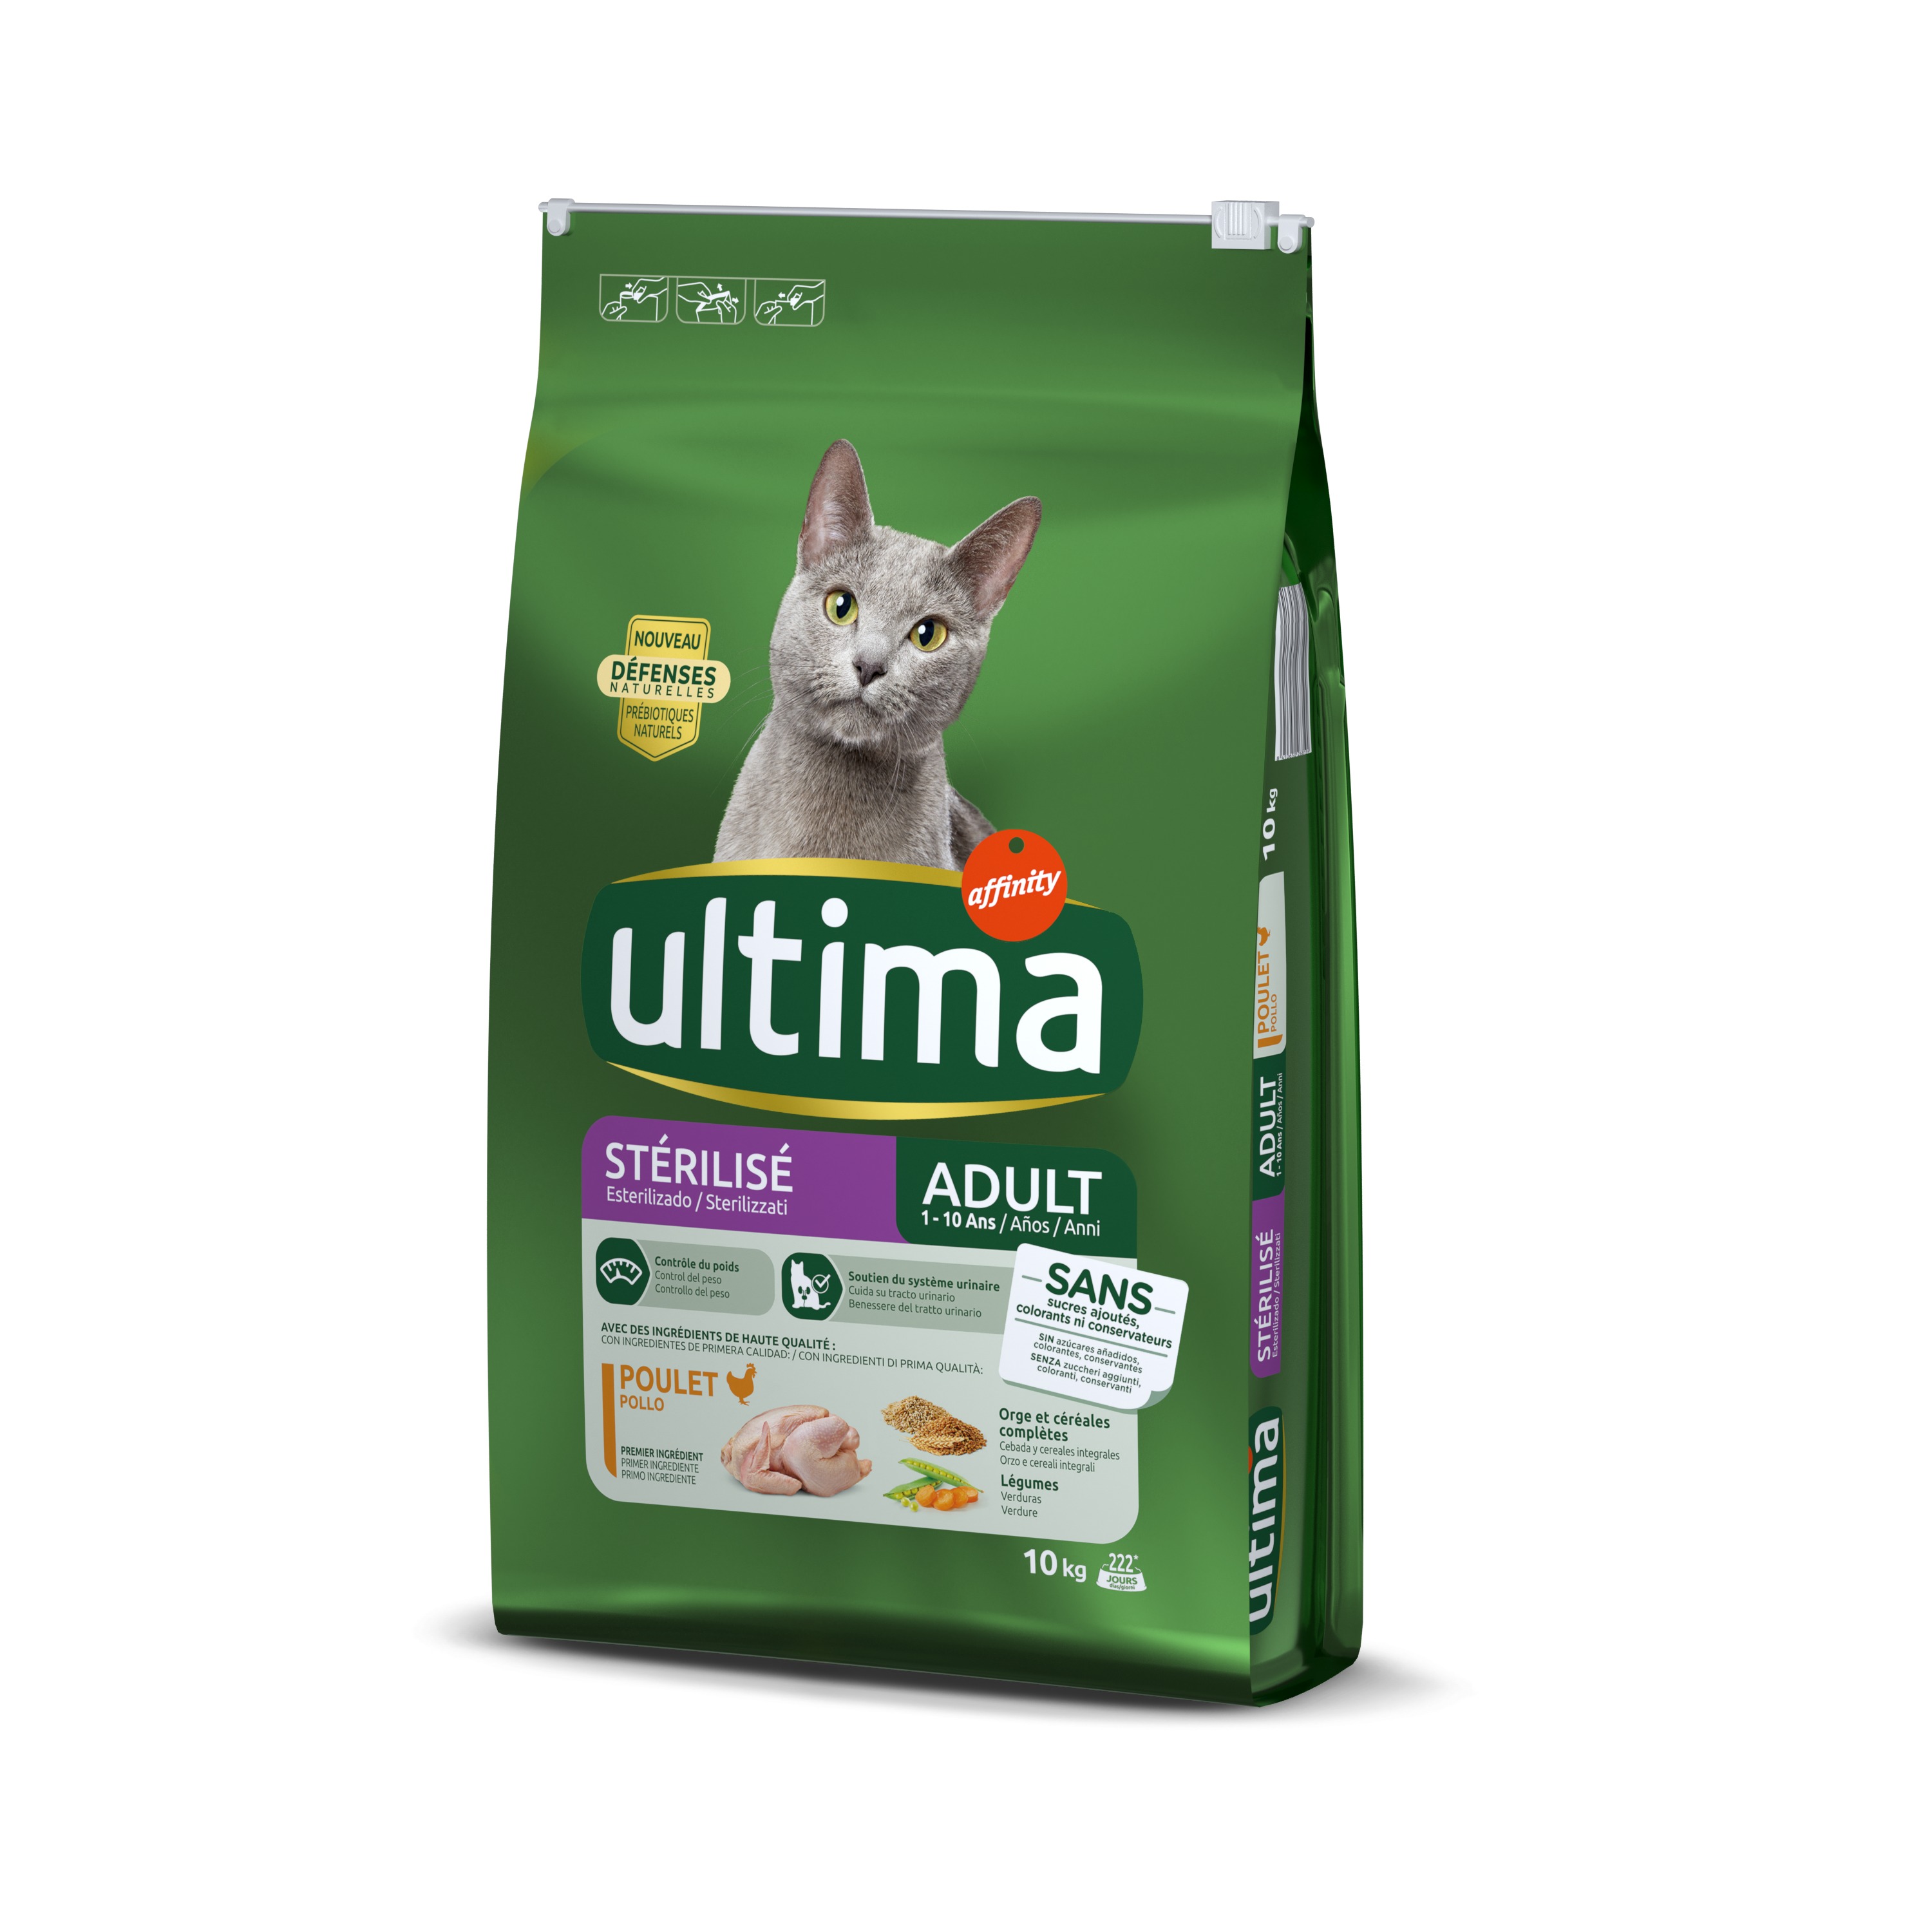 Affinity Ultima 3kg Ultima Cat Sterilized Kip & Gerst Kattenvoer